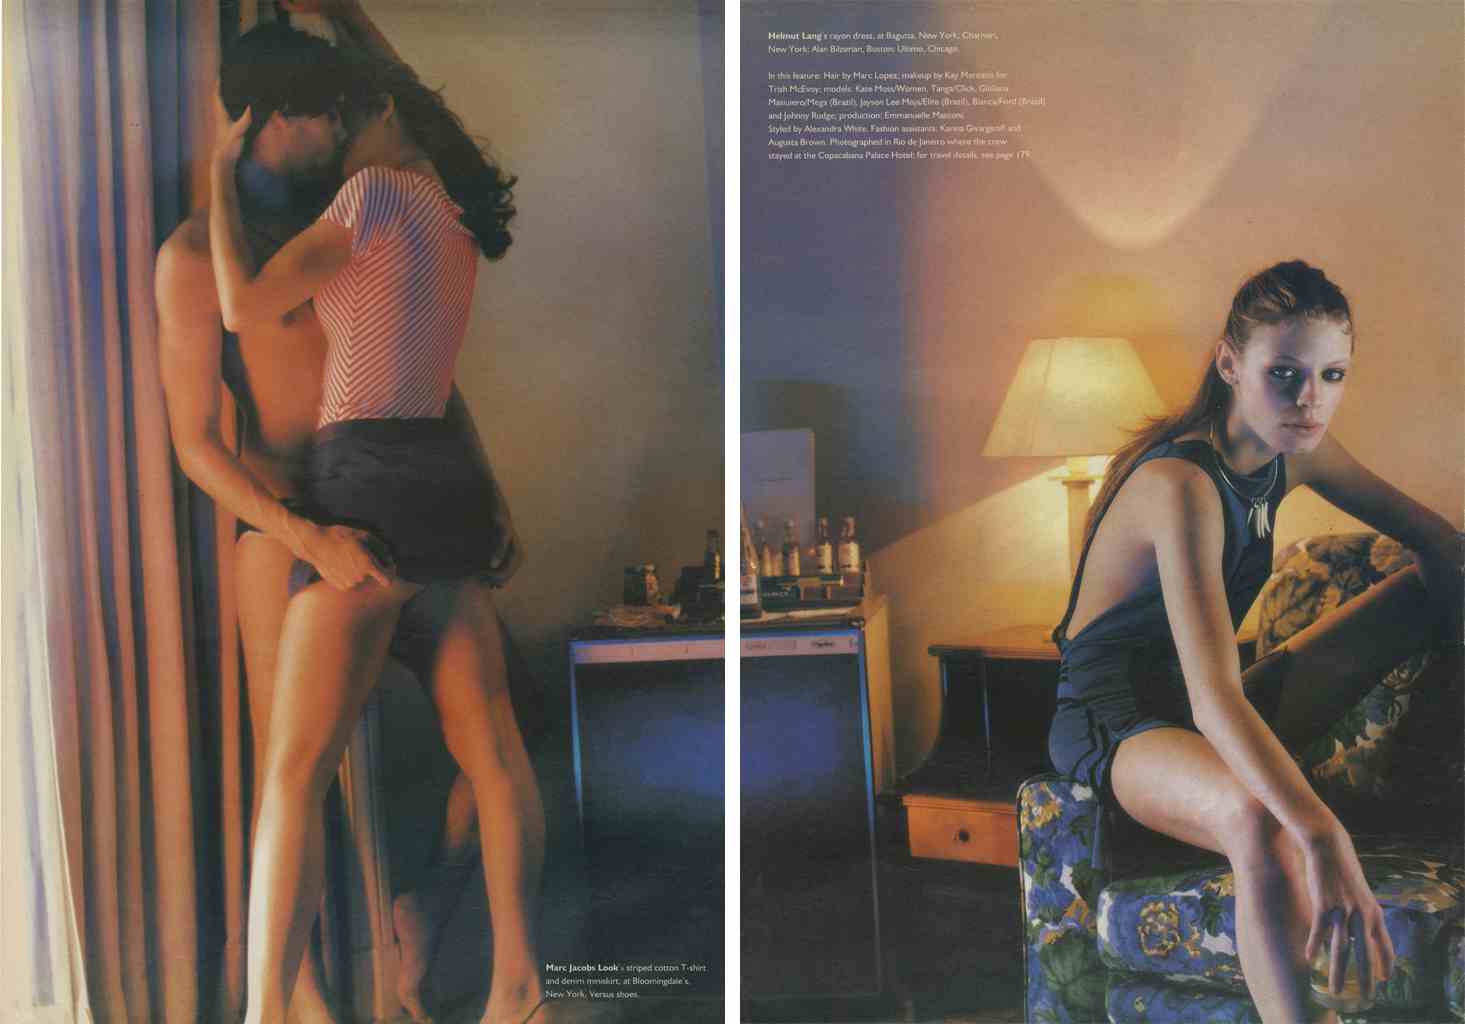 W MAGAZINE - 1997
Photographer: Mario Testino
Model: Kate Moss - Tanga Moreau
Stylist: Alex White
Location: Rio De Janeiro - Brazil